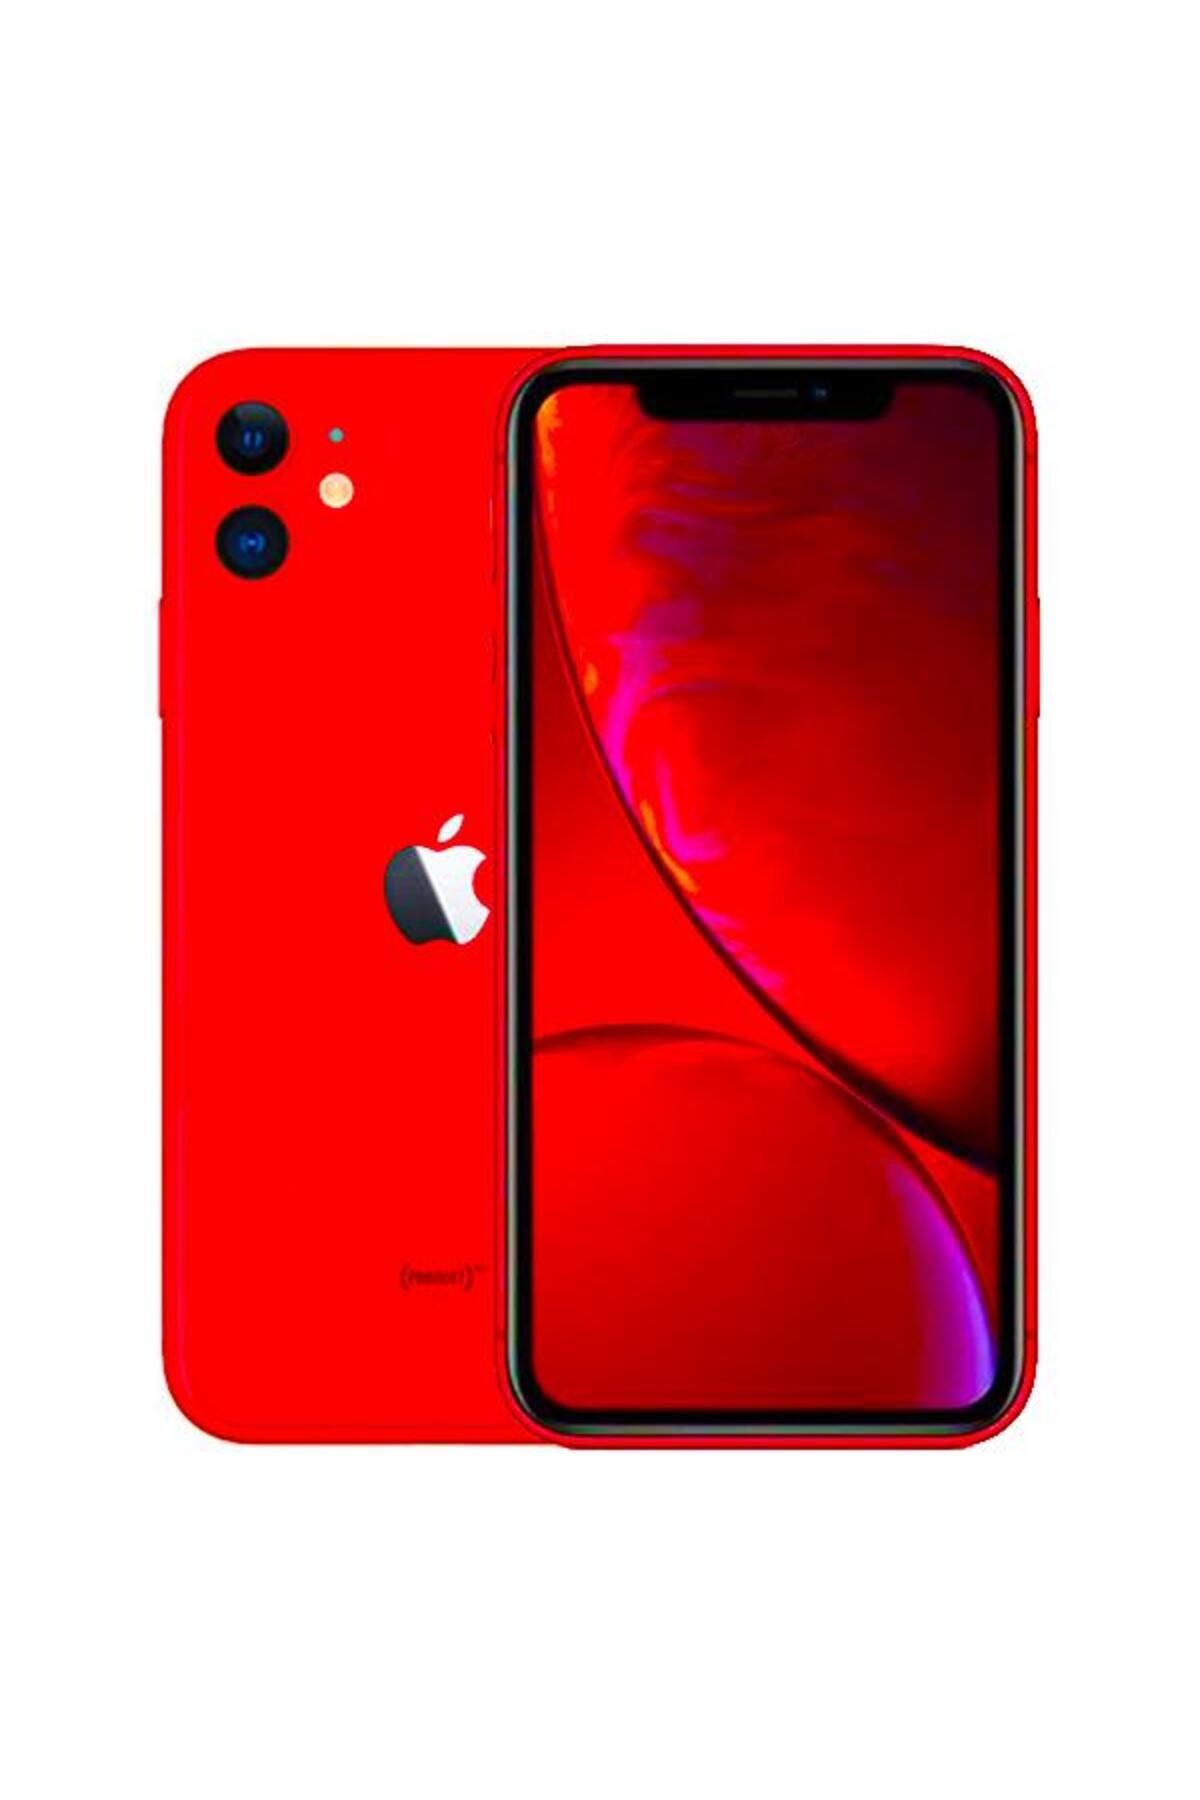 Apple Yenilenmiş Iphone 11 Red 64gb B Kalite (12 Ay Garantili)